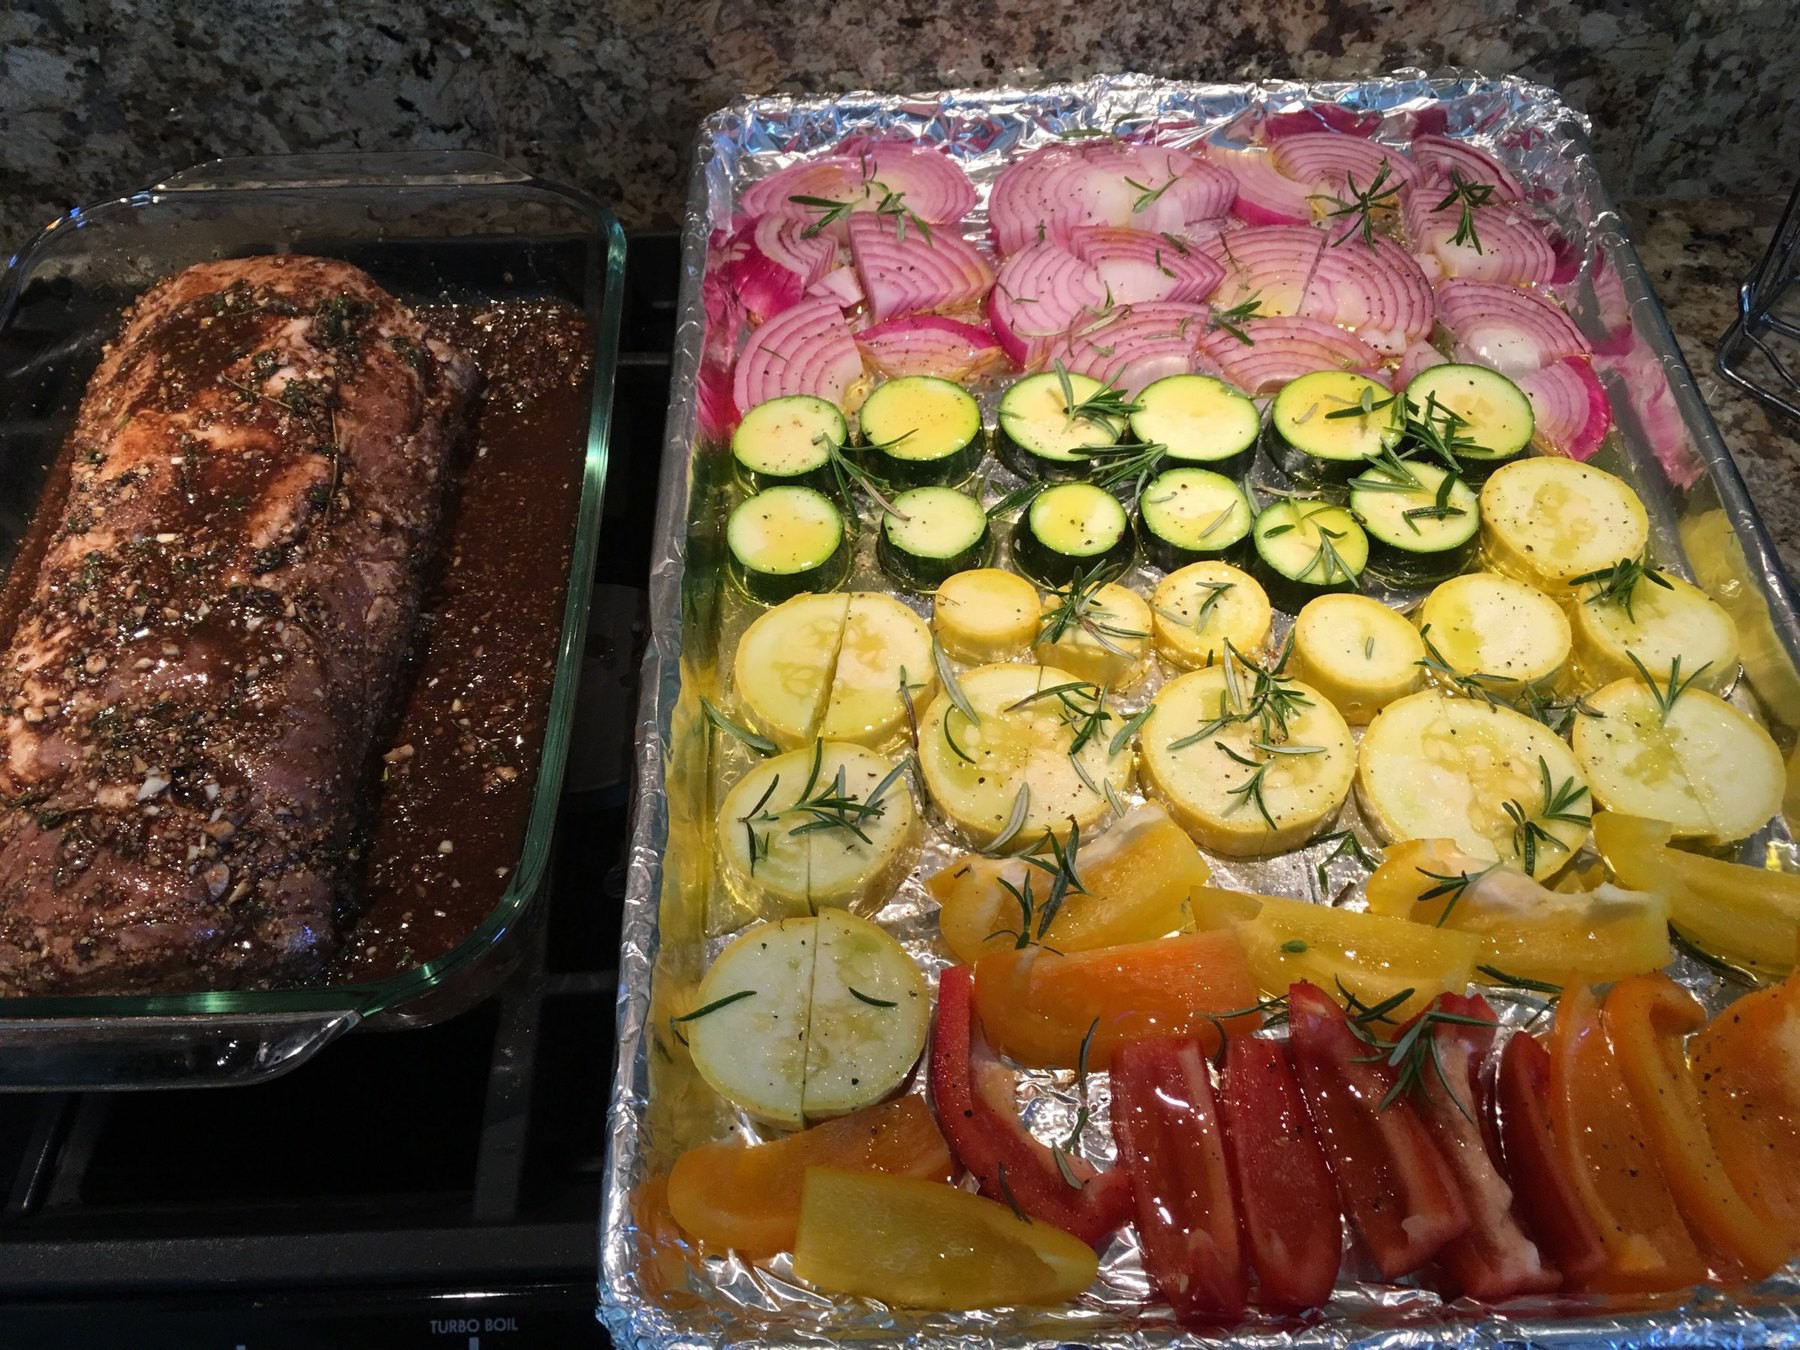 pork loun and vegetables, prepared